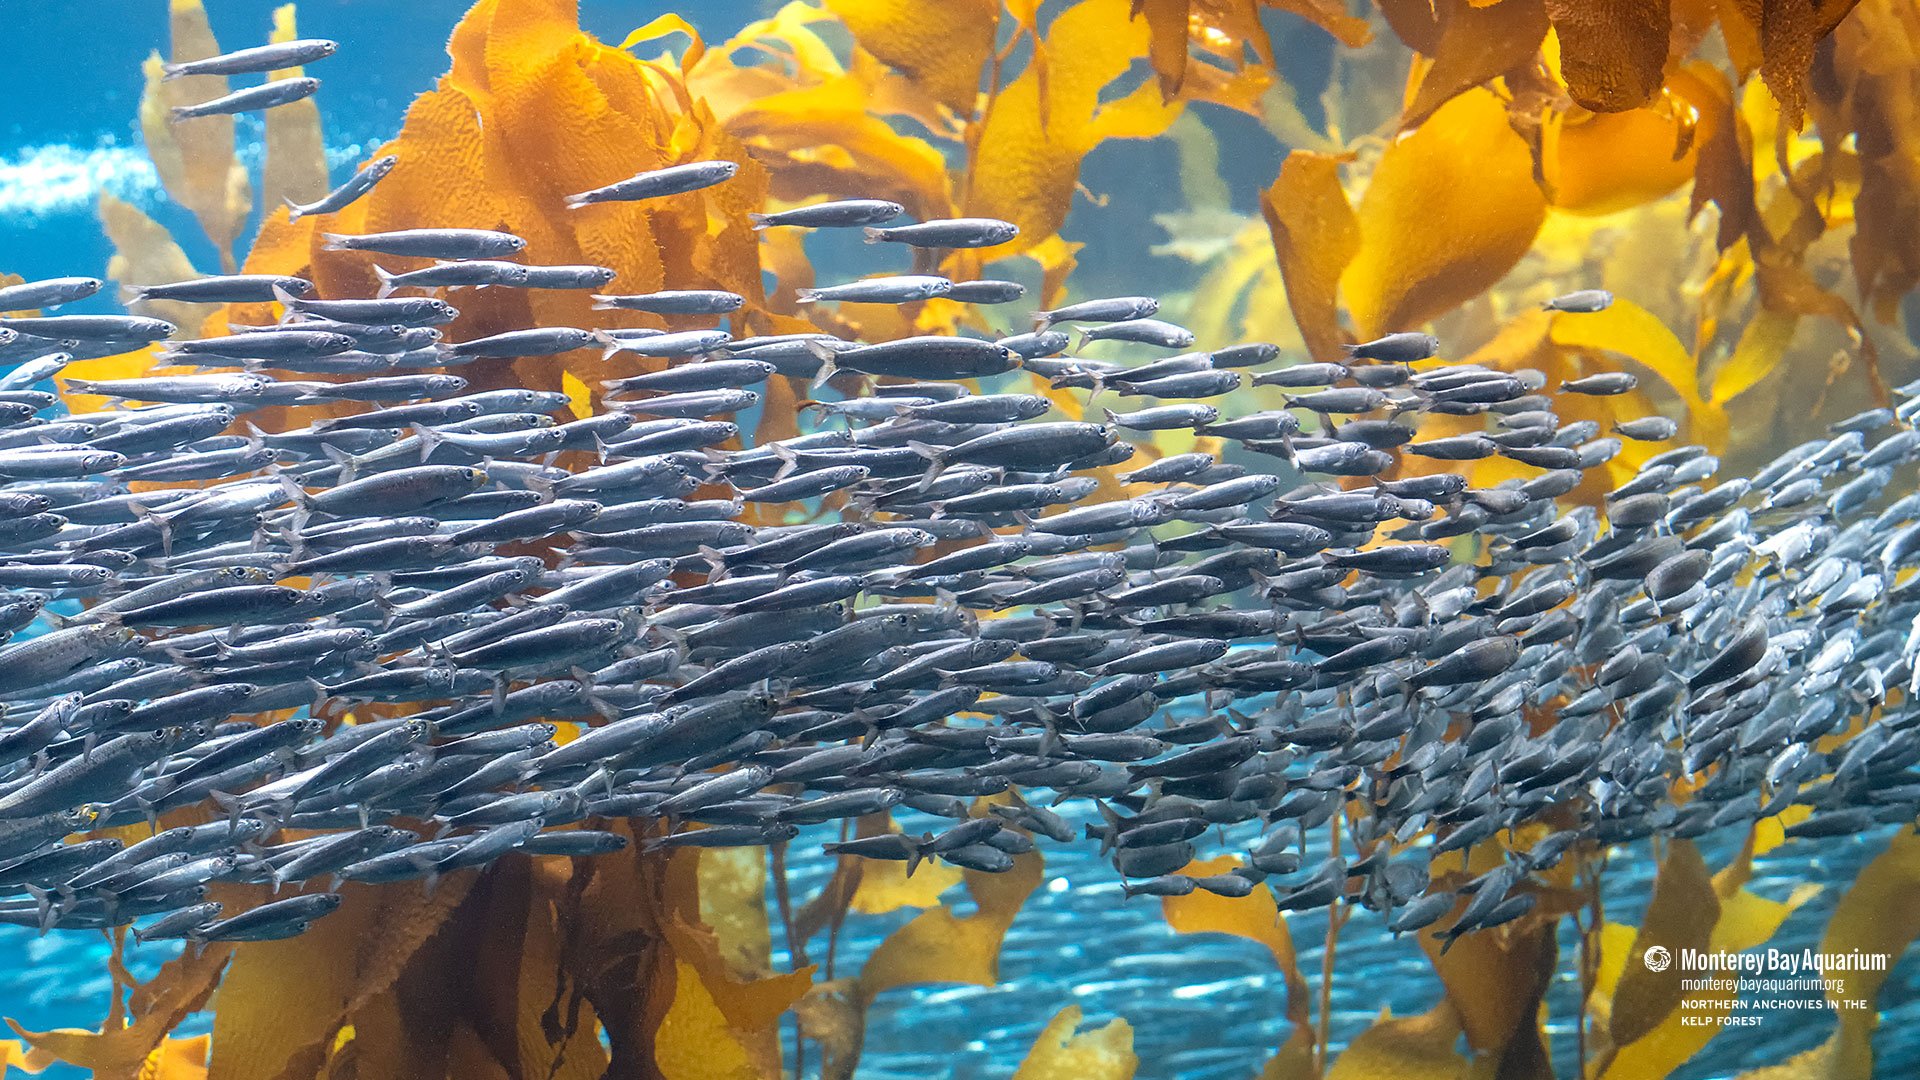 kelp forest food web